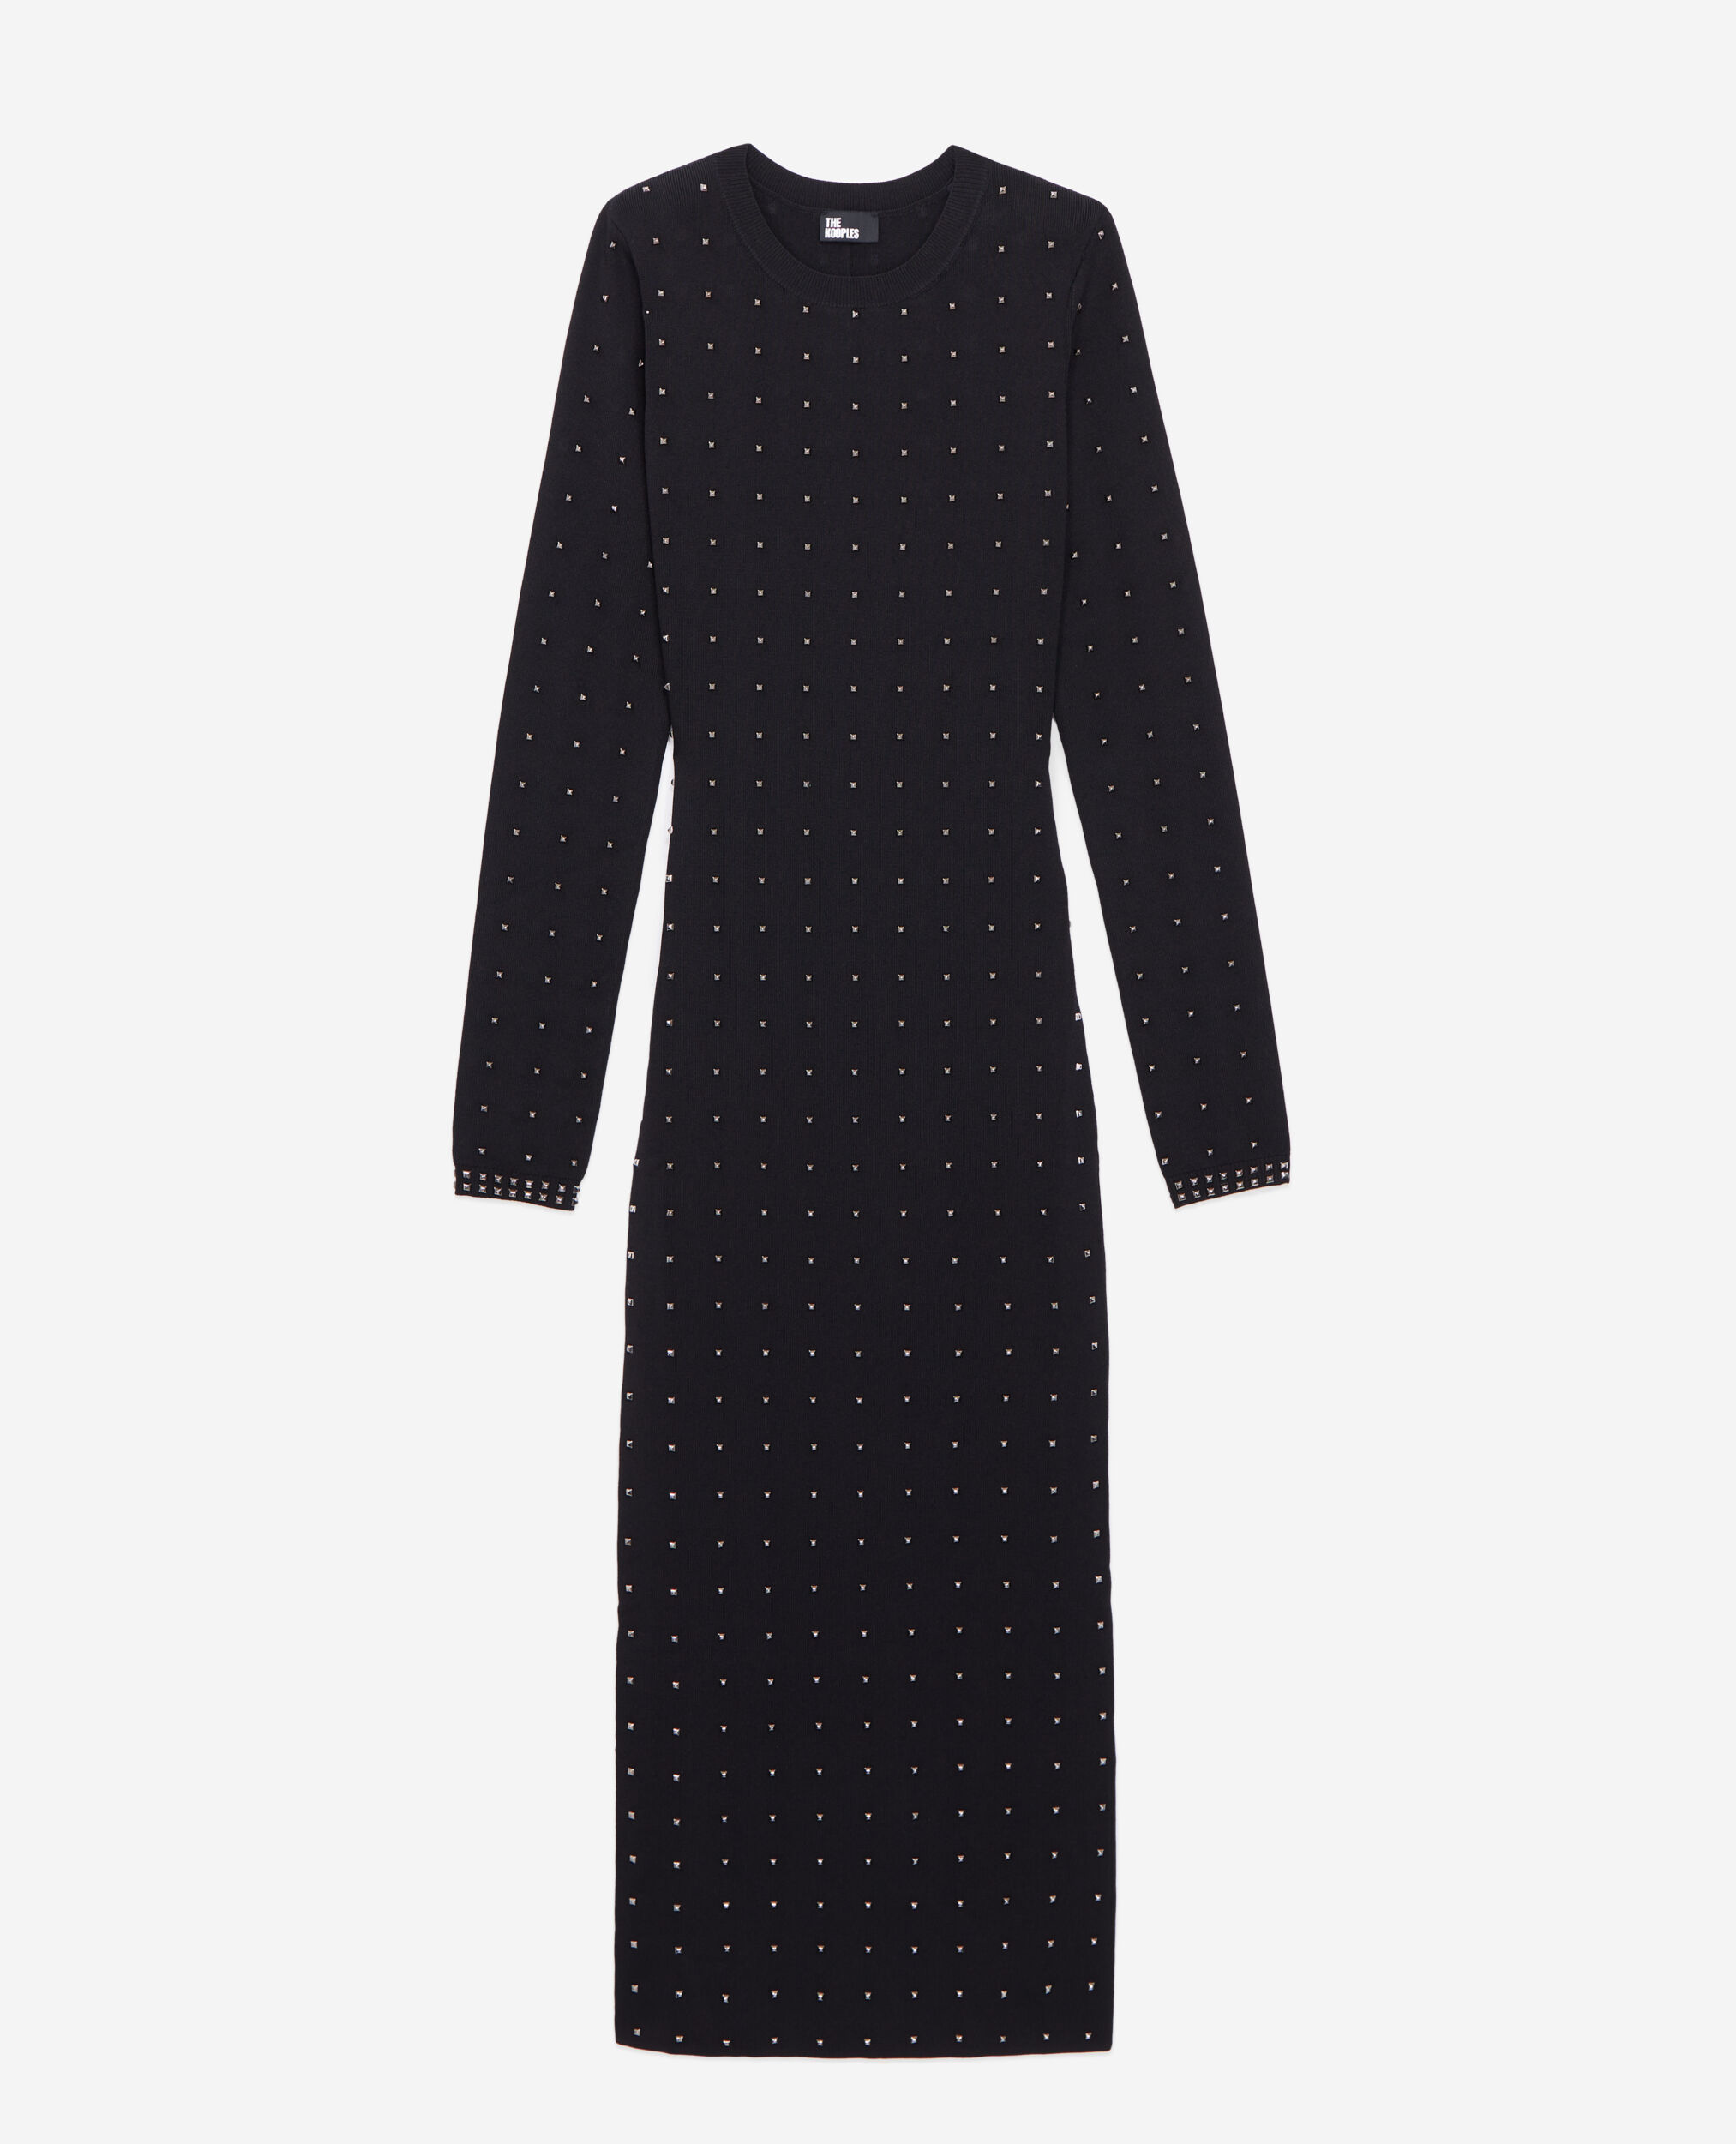 Robe noire longue avec spikes, BLACK, hi-res image number null